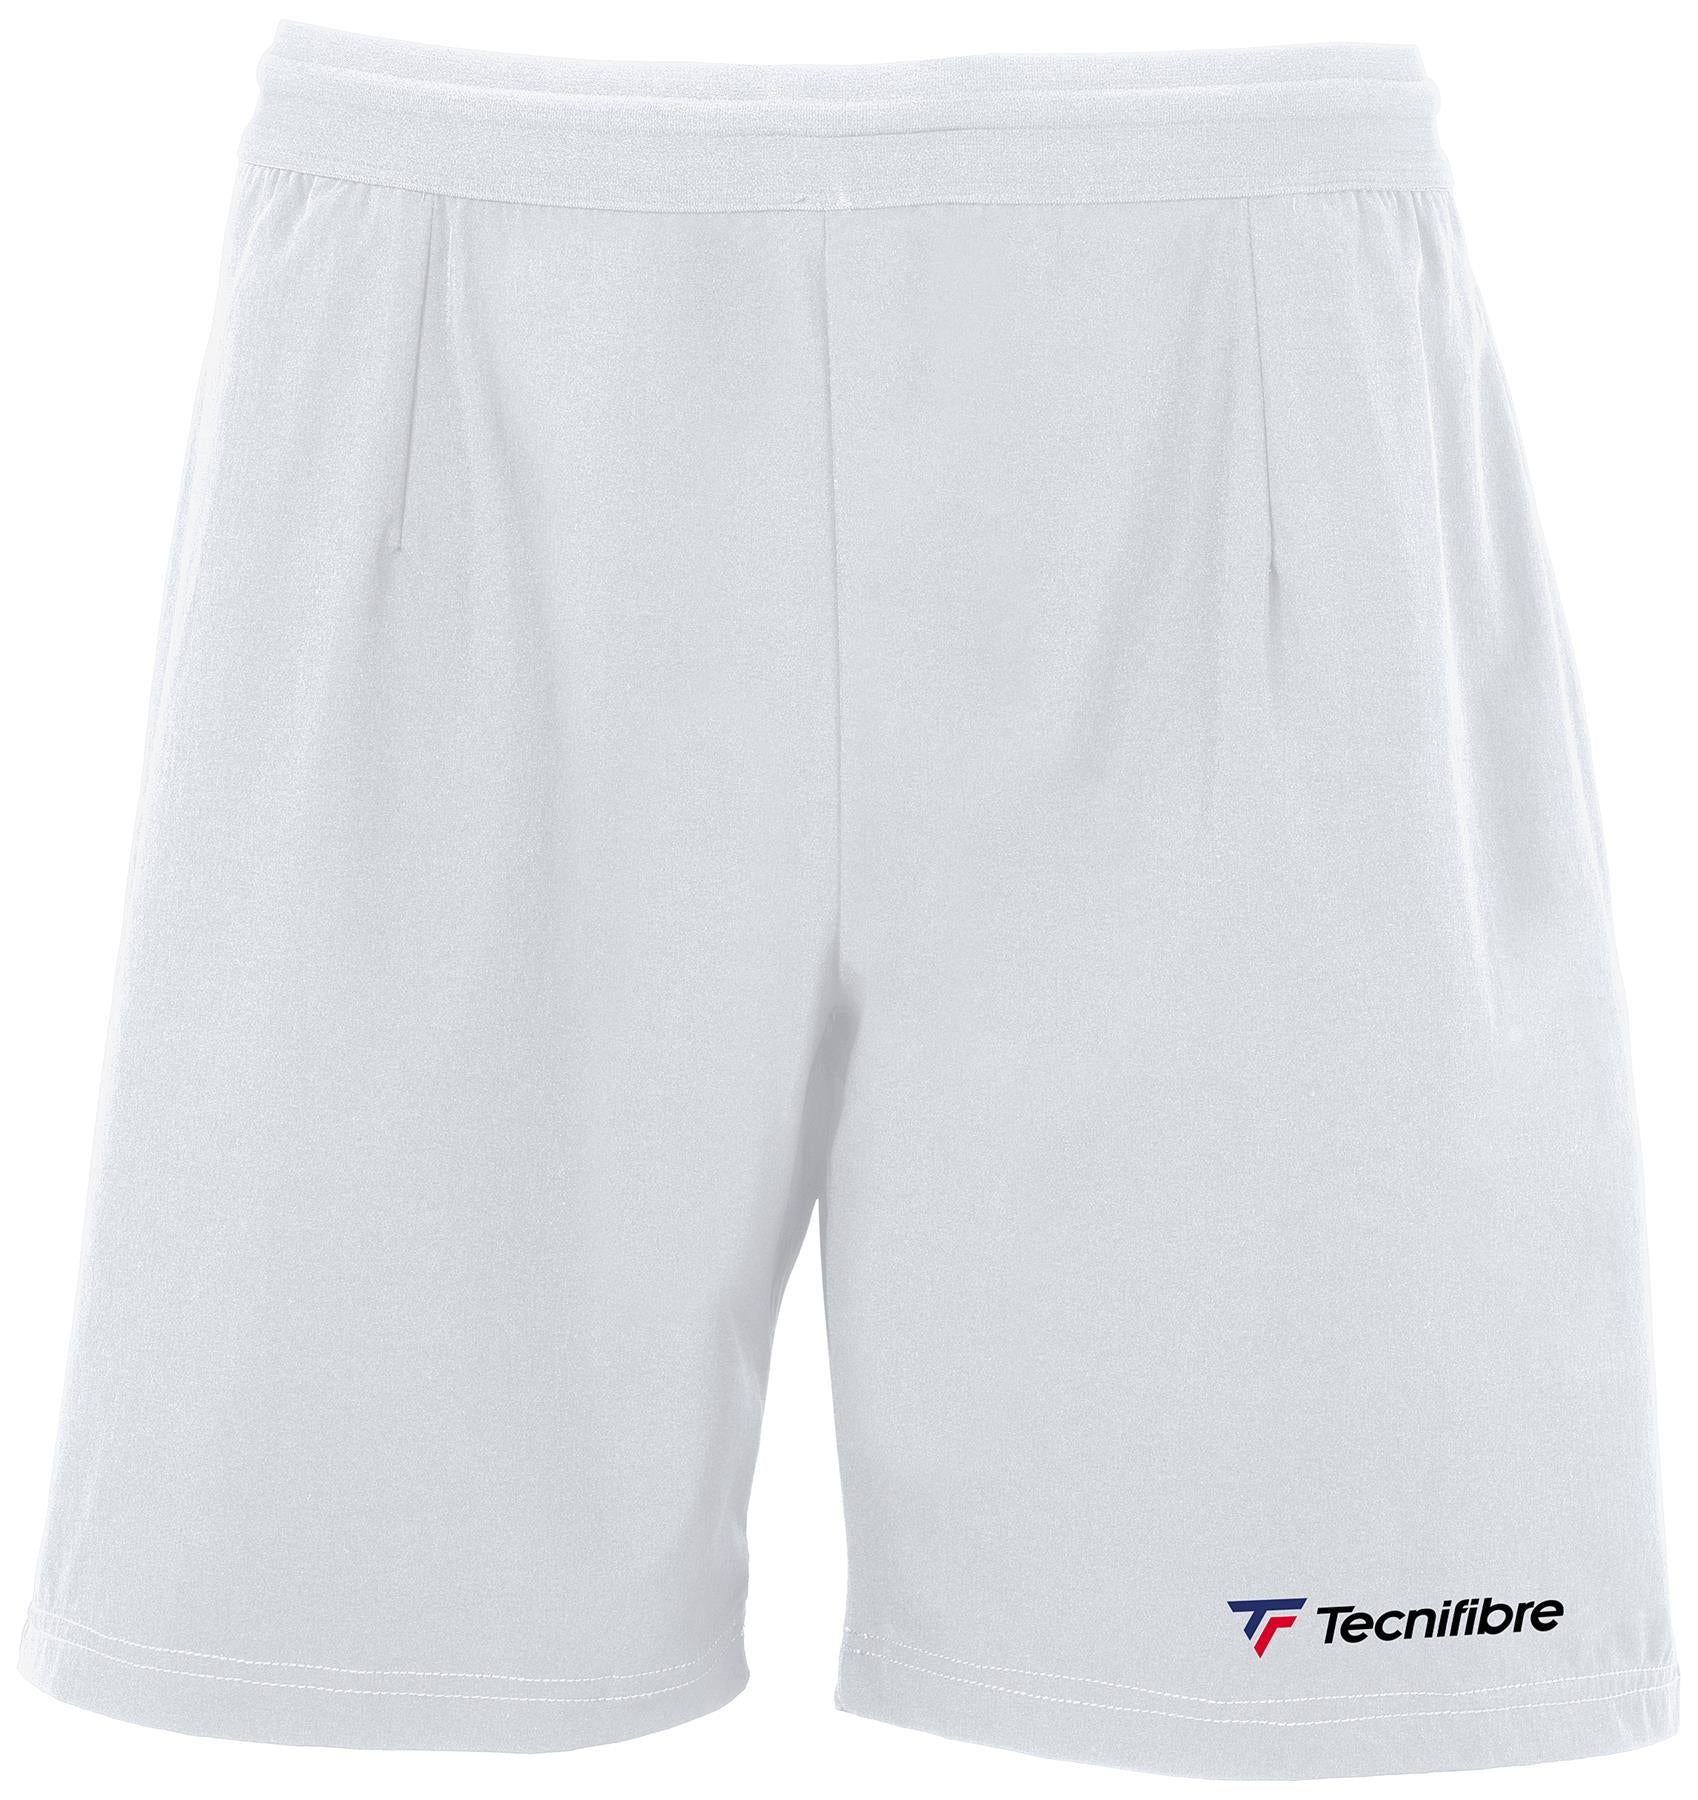 Tecnifibre Mens Stretch Tennis Shorts - White